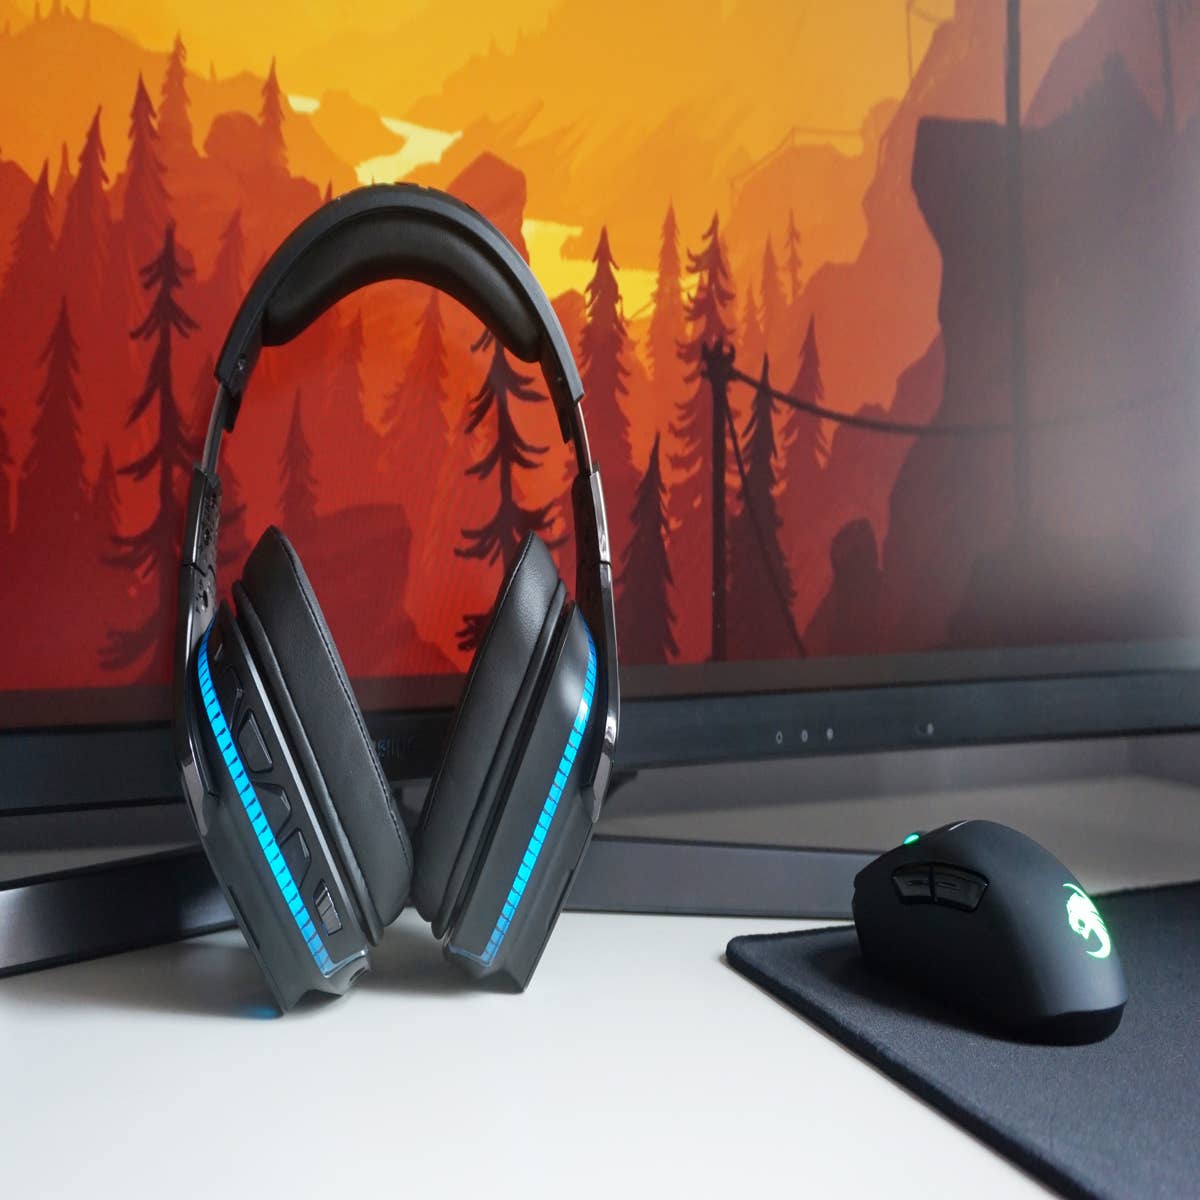 Logitech G935 review: An outstanding wireless gaming headset